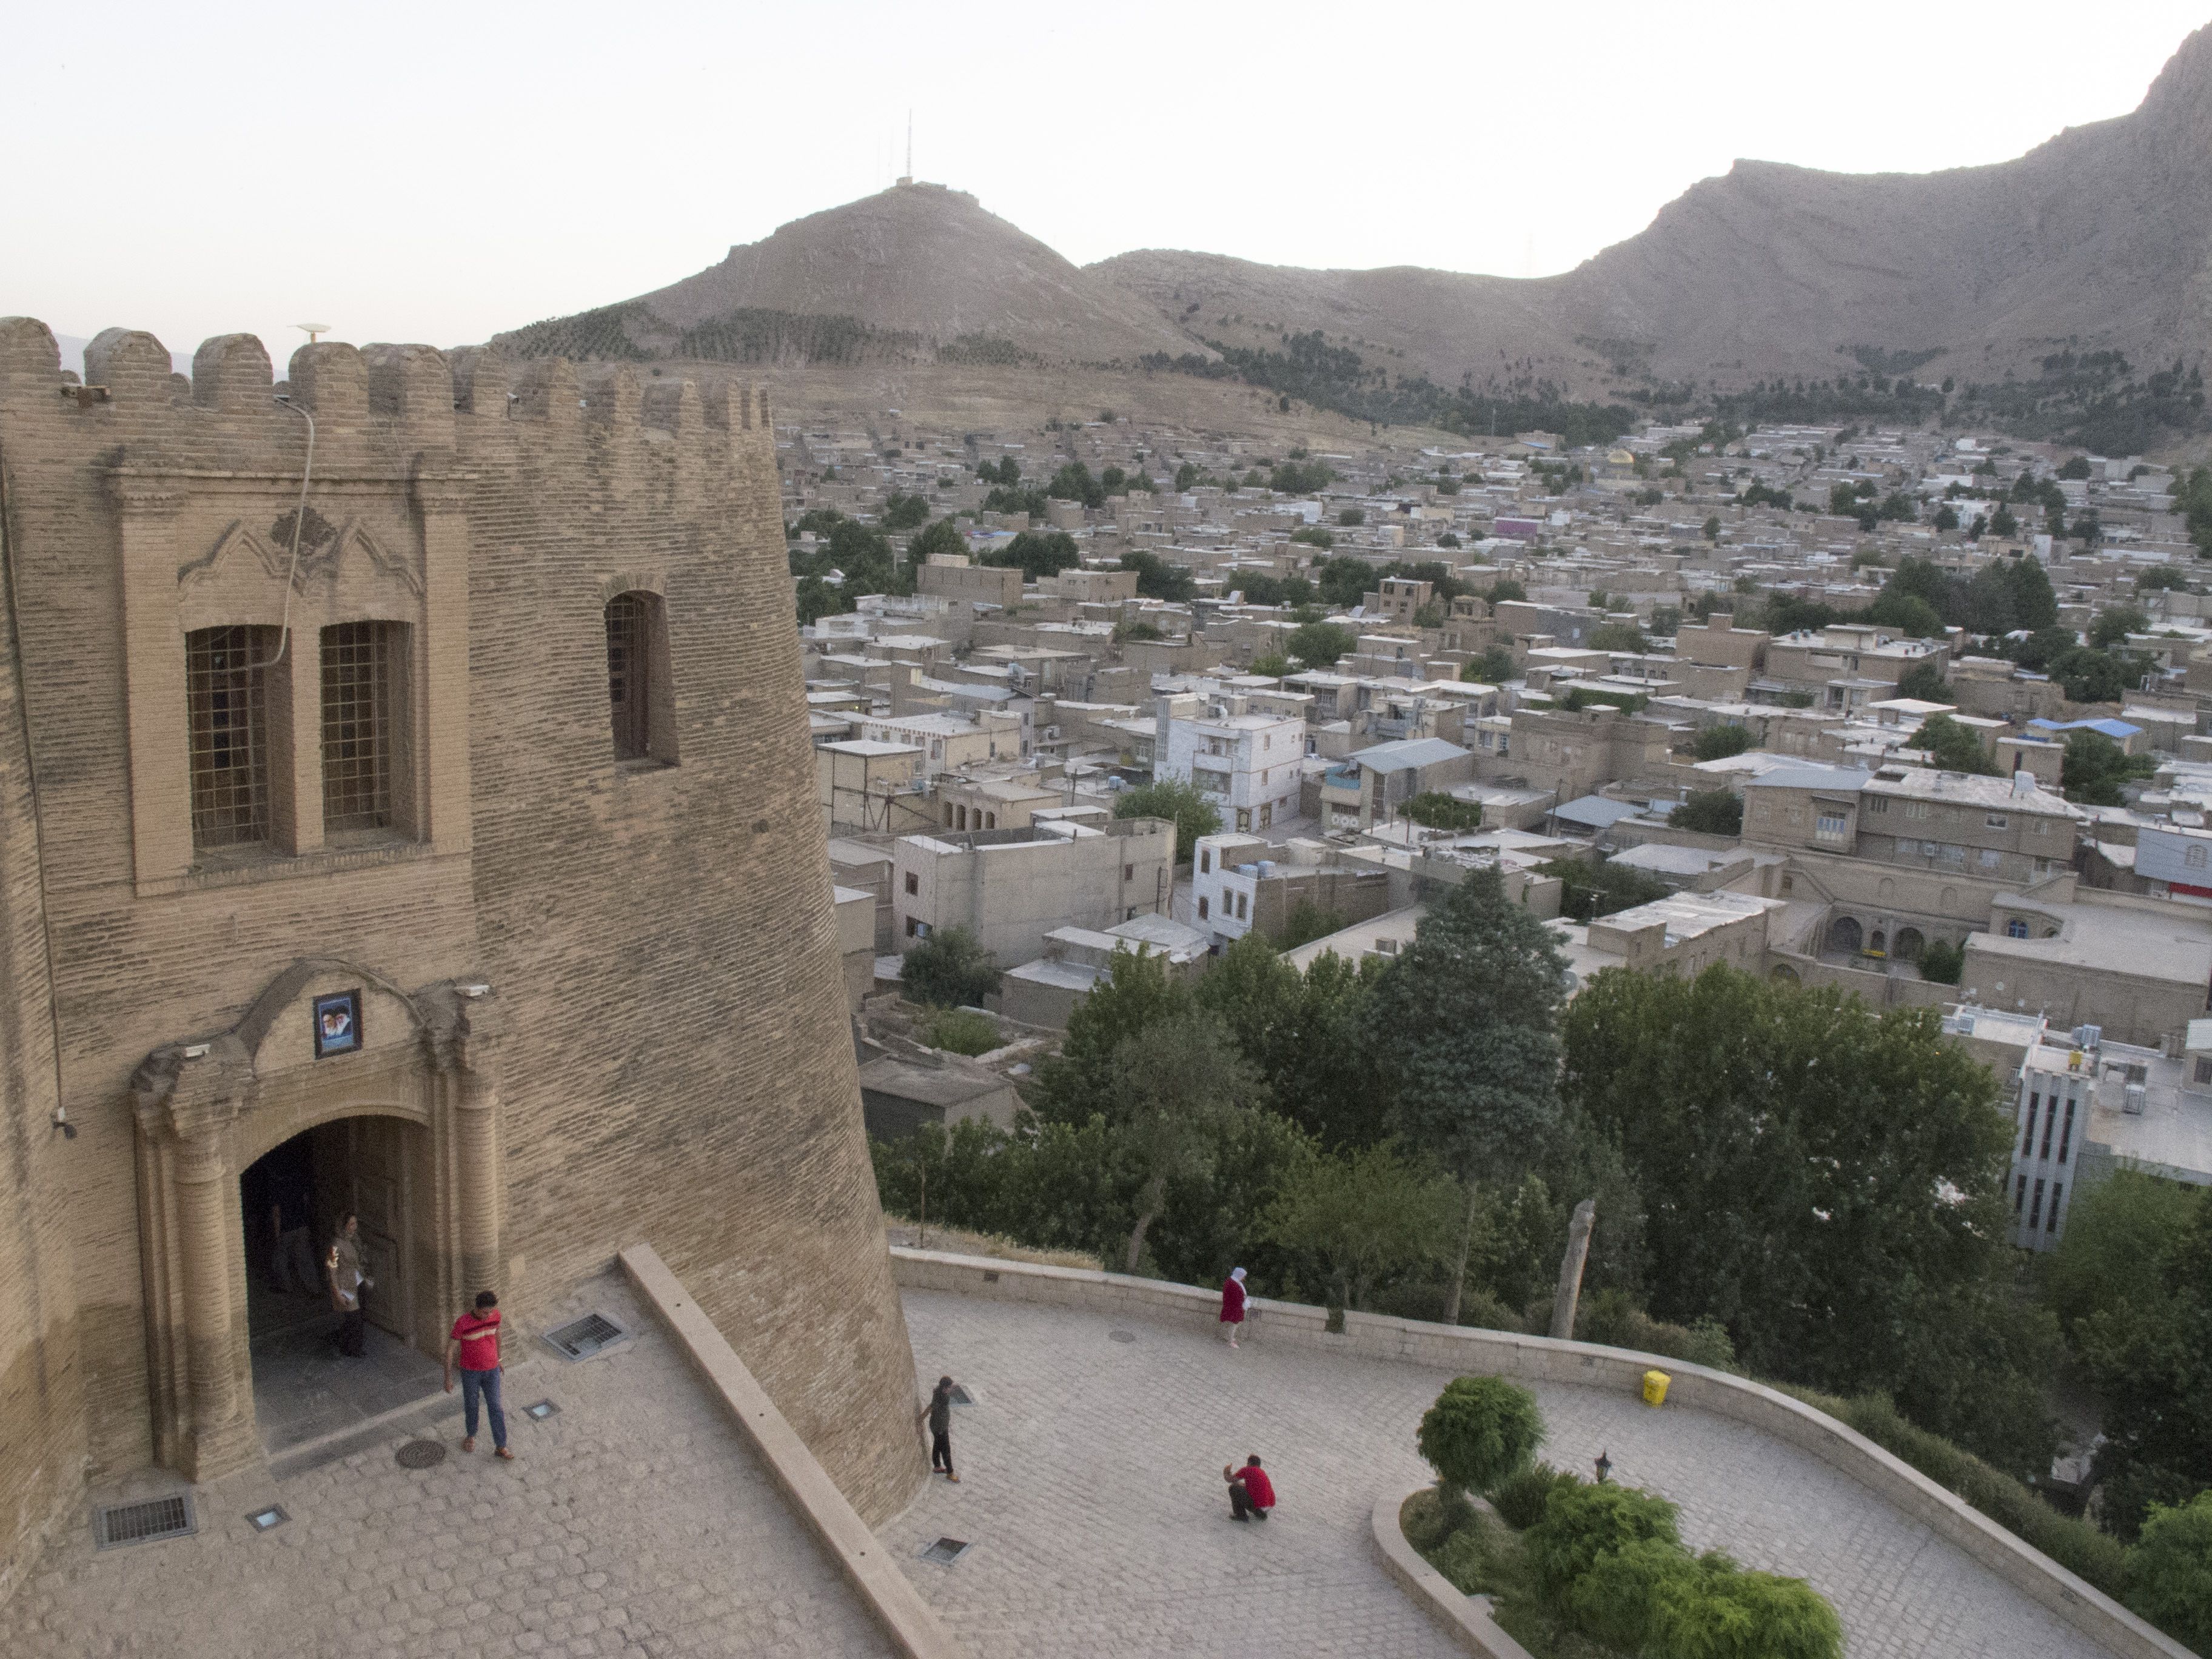 Iran il castello di Khorramabadjpg